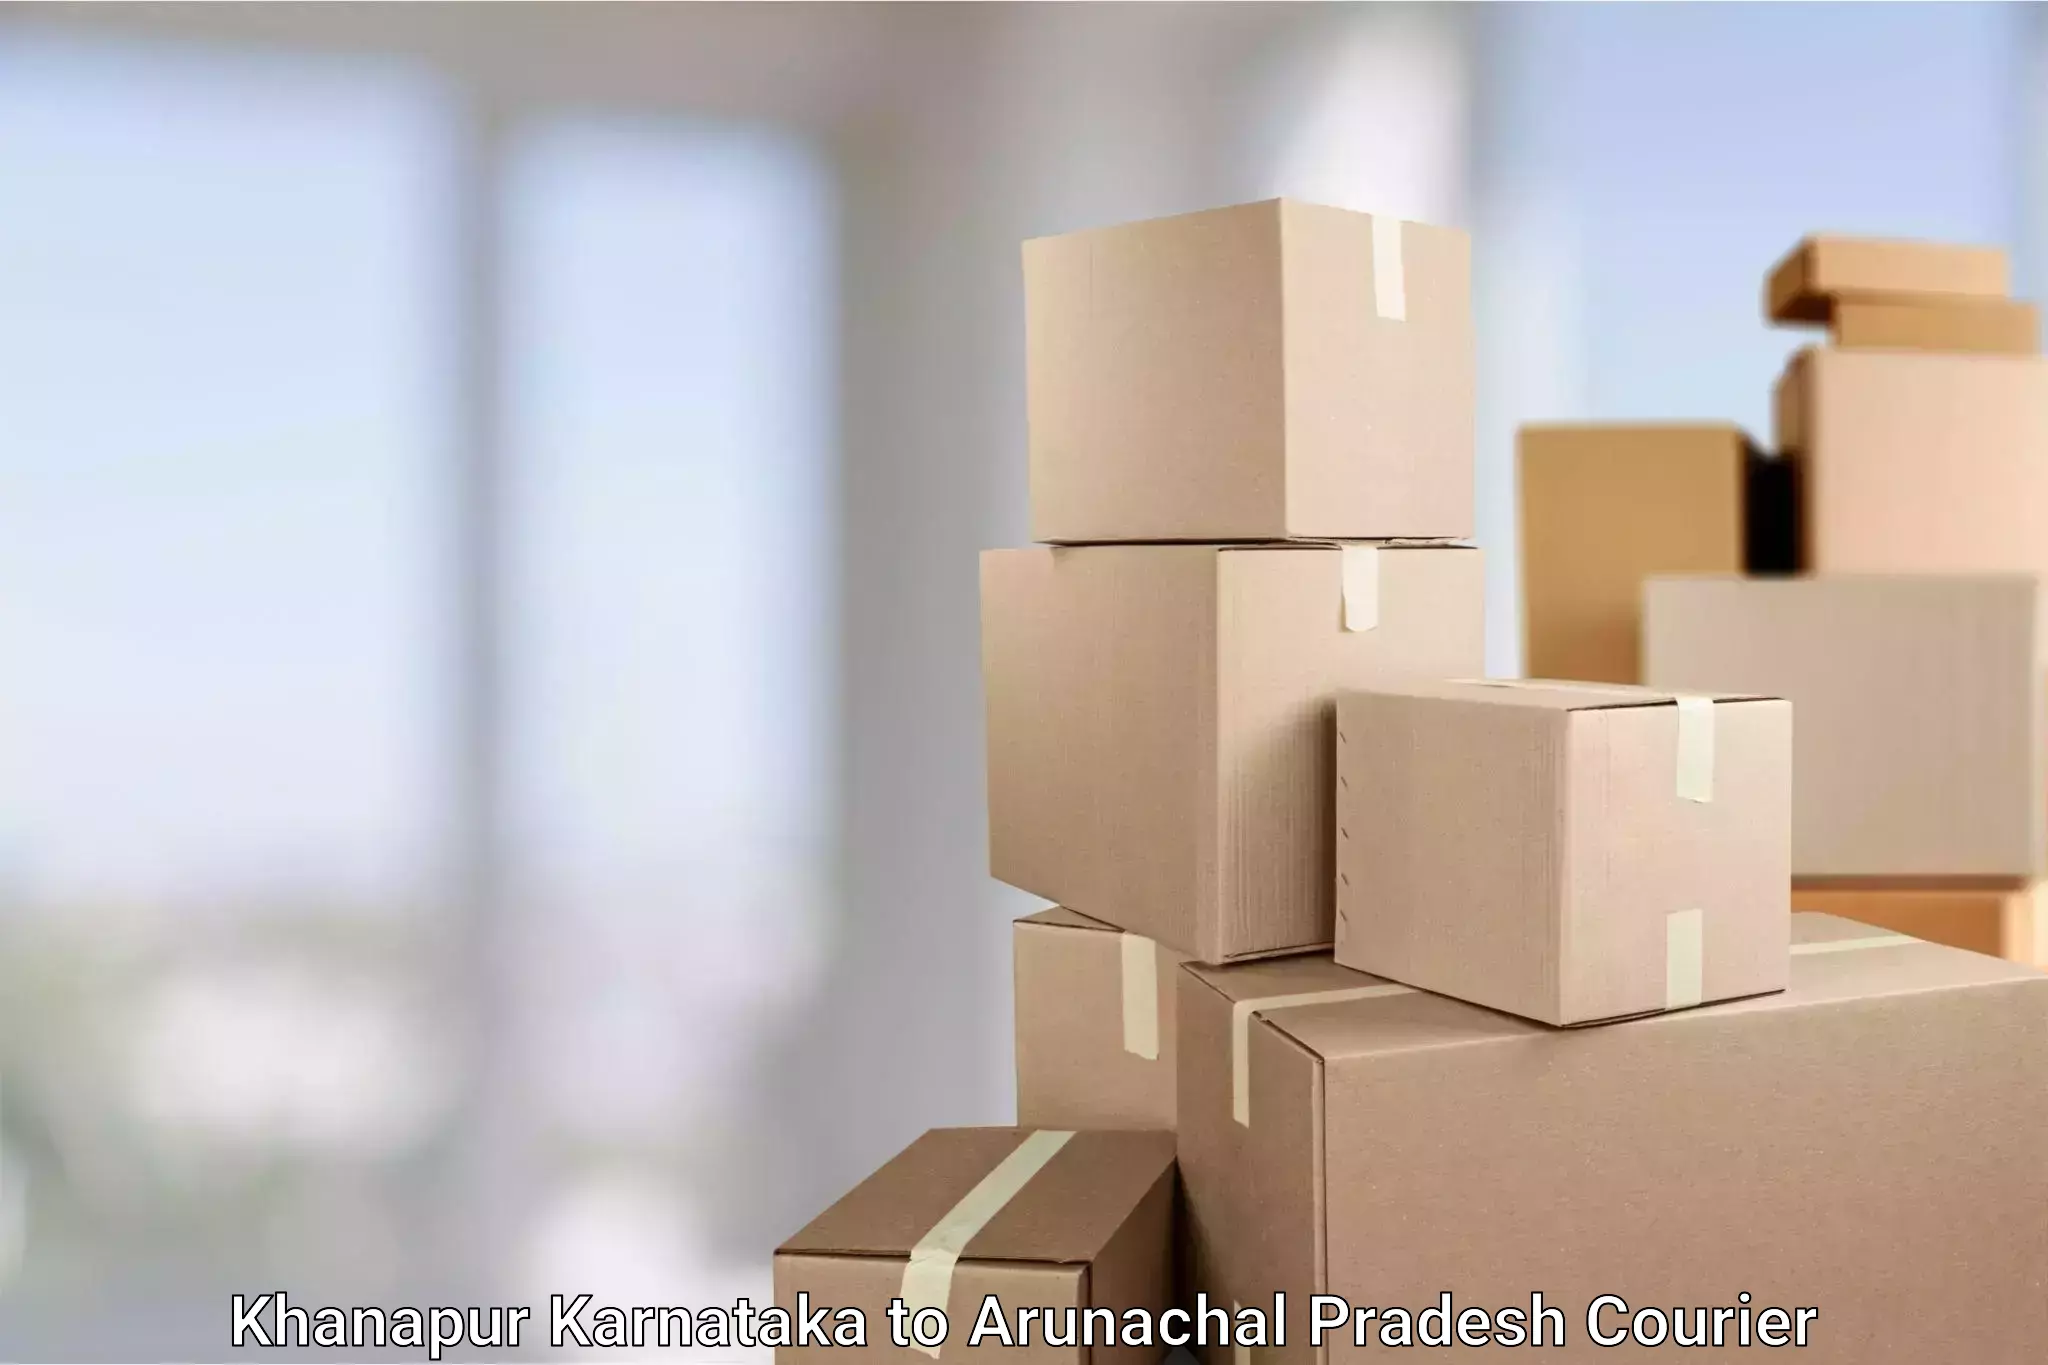 Express delivery solutions Khanapur Karnataka to Arunachal Pradesh